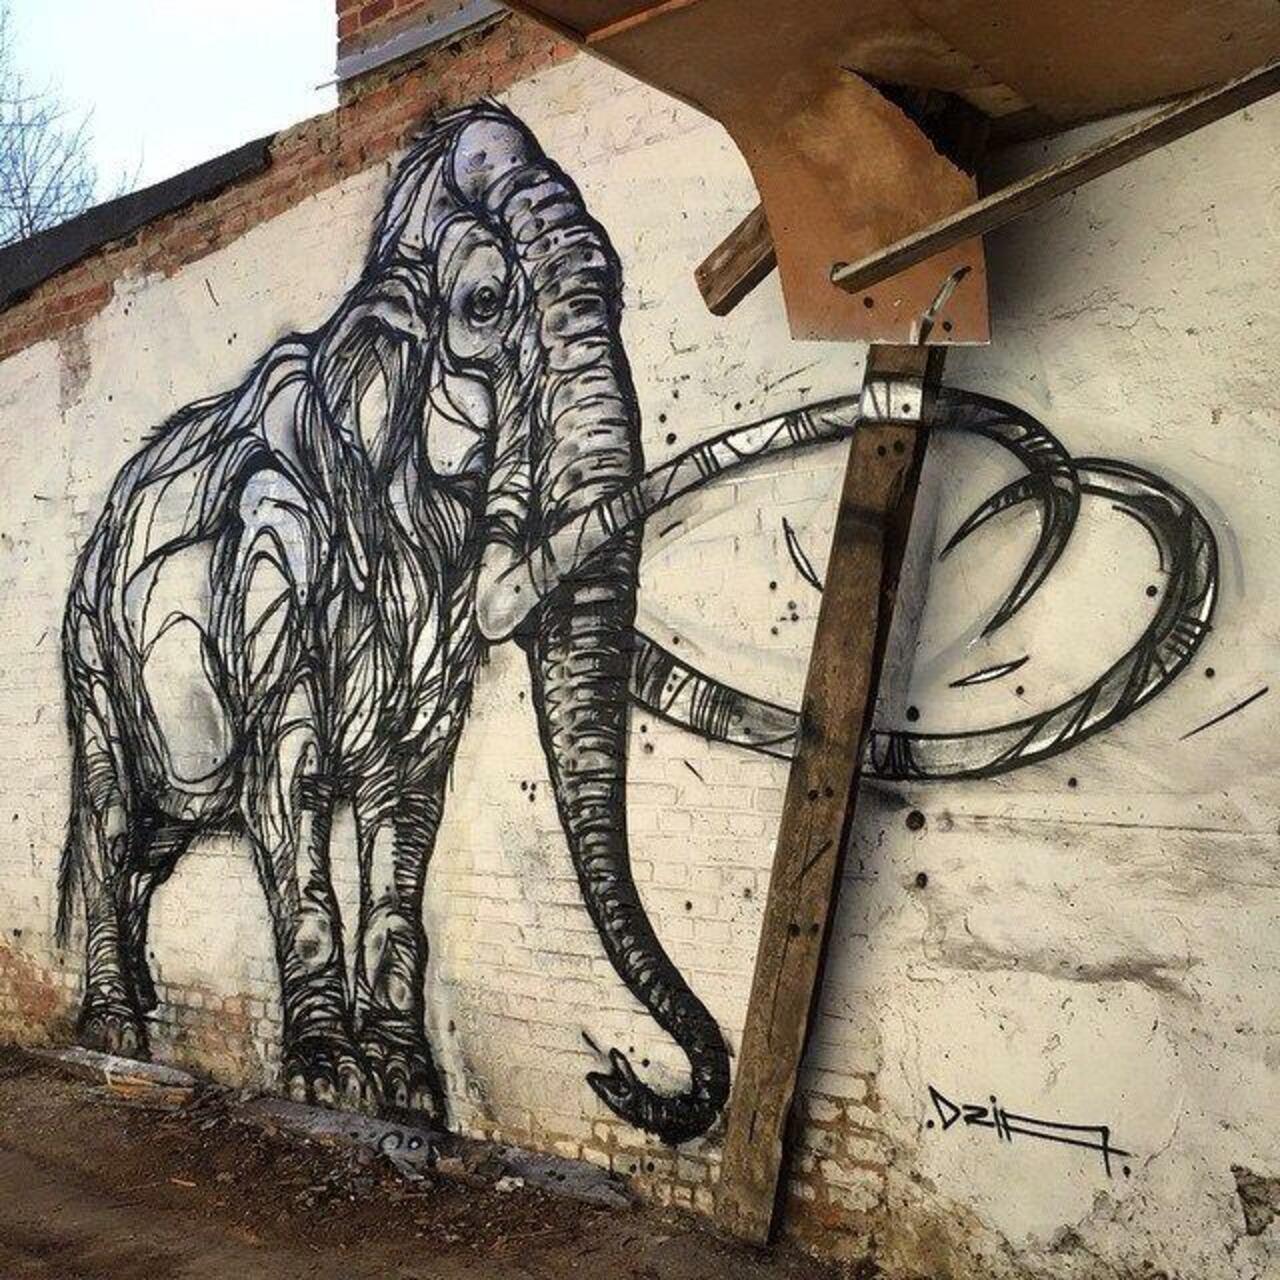 RT "@GoogleStreetArt: Mammoth. New nature in Street Art wall by DZIA 

#art #graffiti #mural #streetart http://t.co/vwjcPOiSDJ"